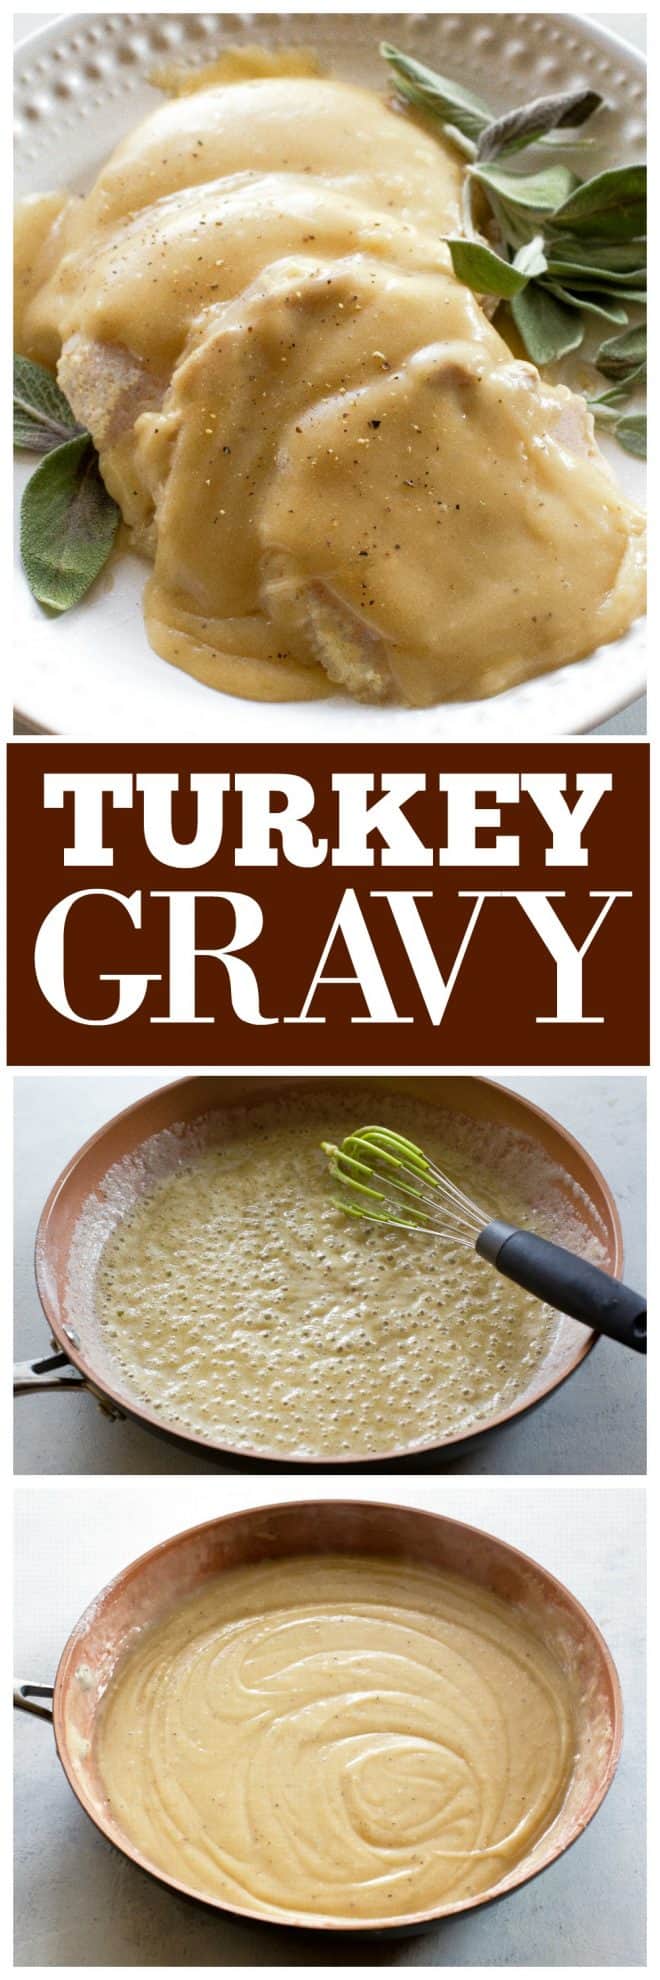 turkey gravy recipe - Turkey Gravy Recipe